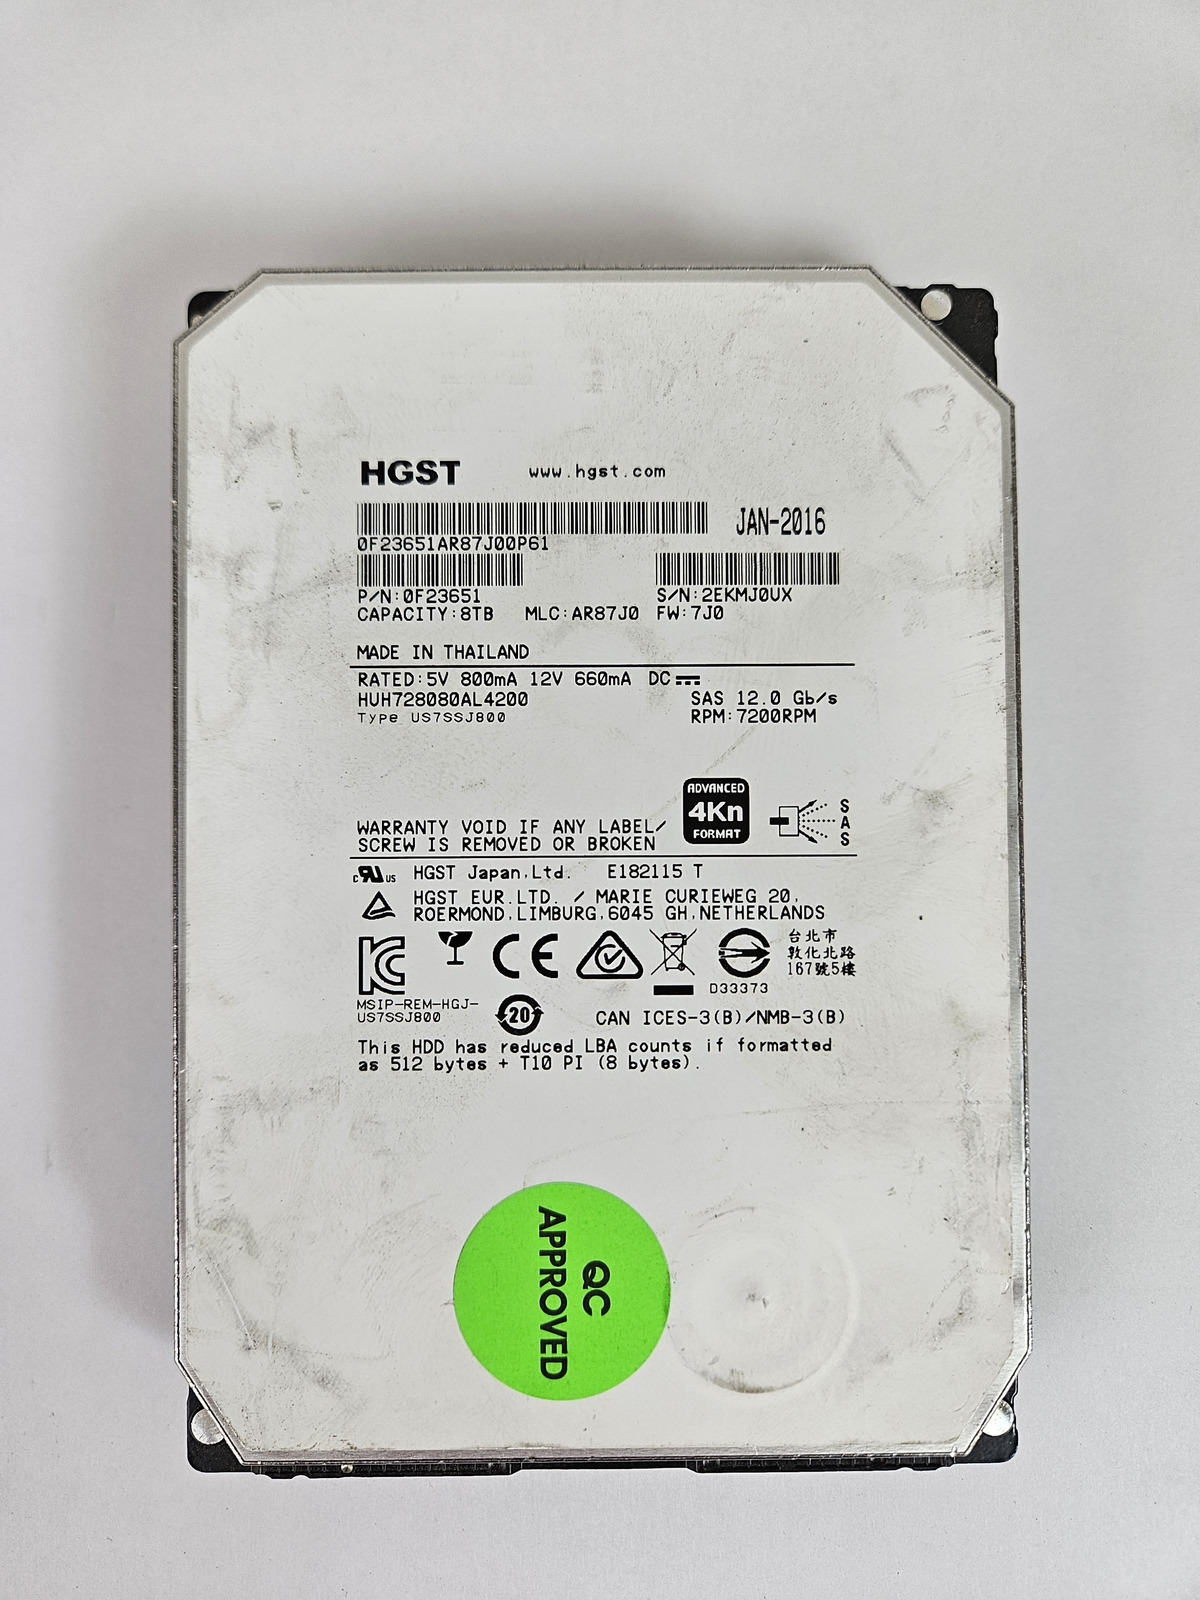 HDD HGST HUH728080AL4200 8TB SAS 7200 12GB 3.5 P/N: 0F23651